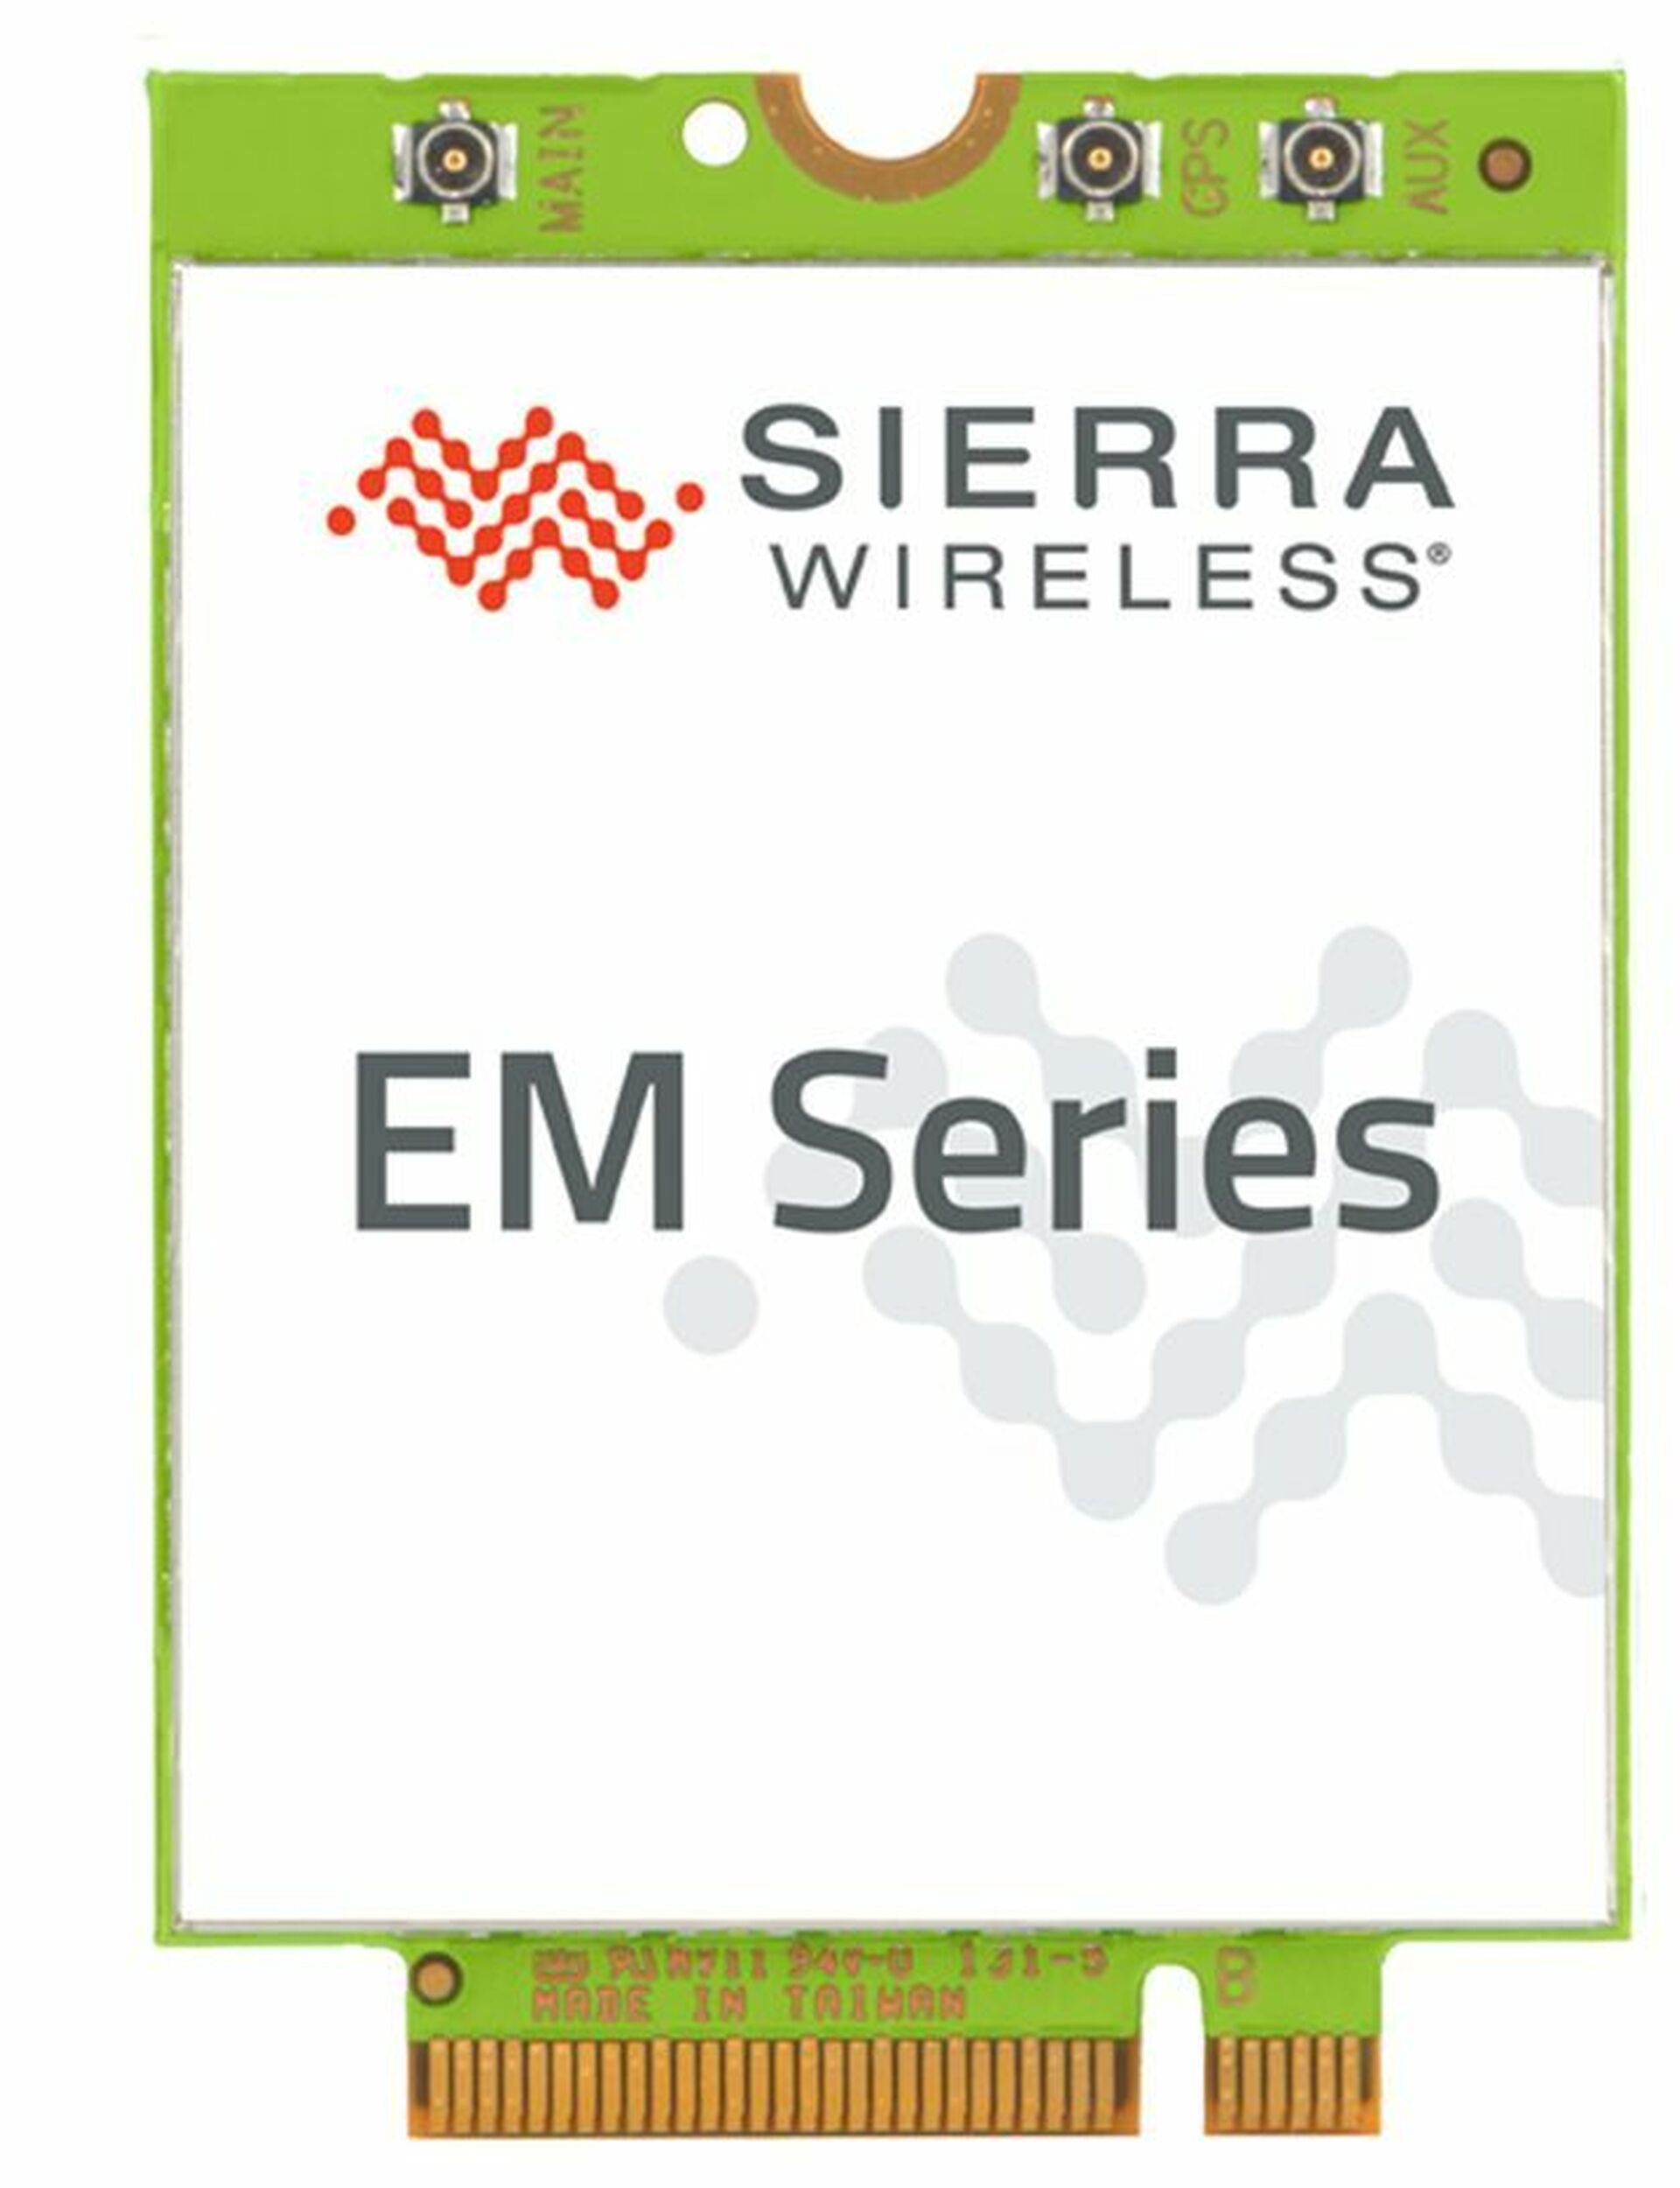 Sierra Wireless EM series